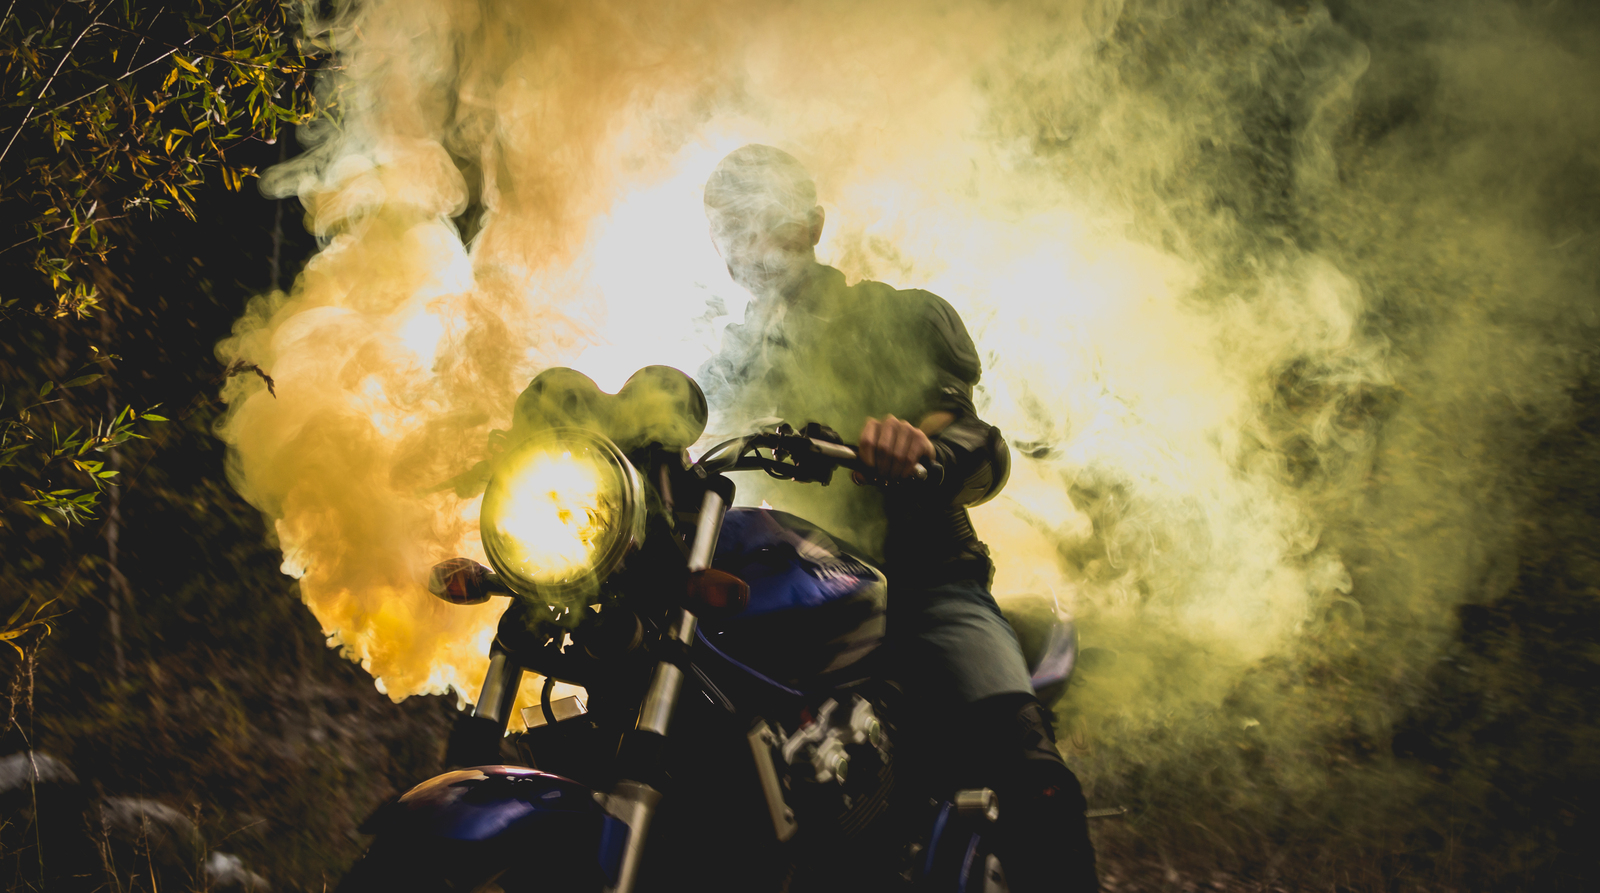 Мотоциклист в дыму